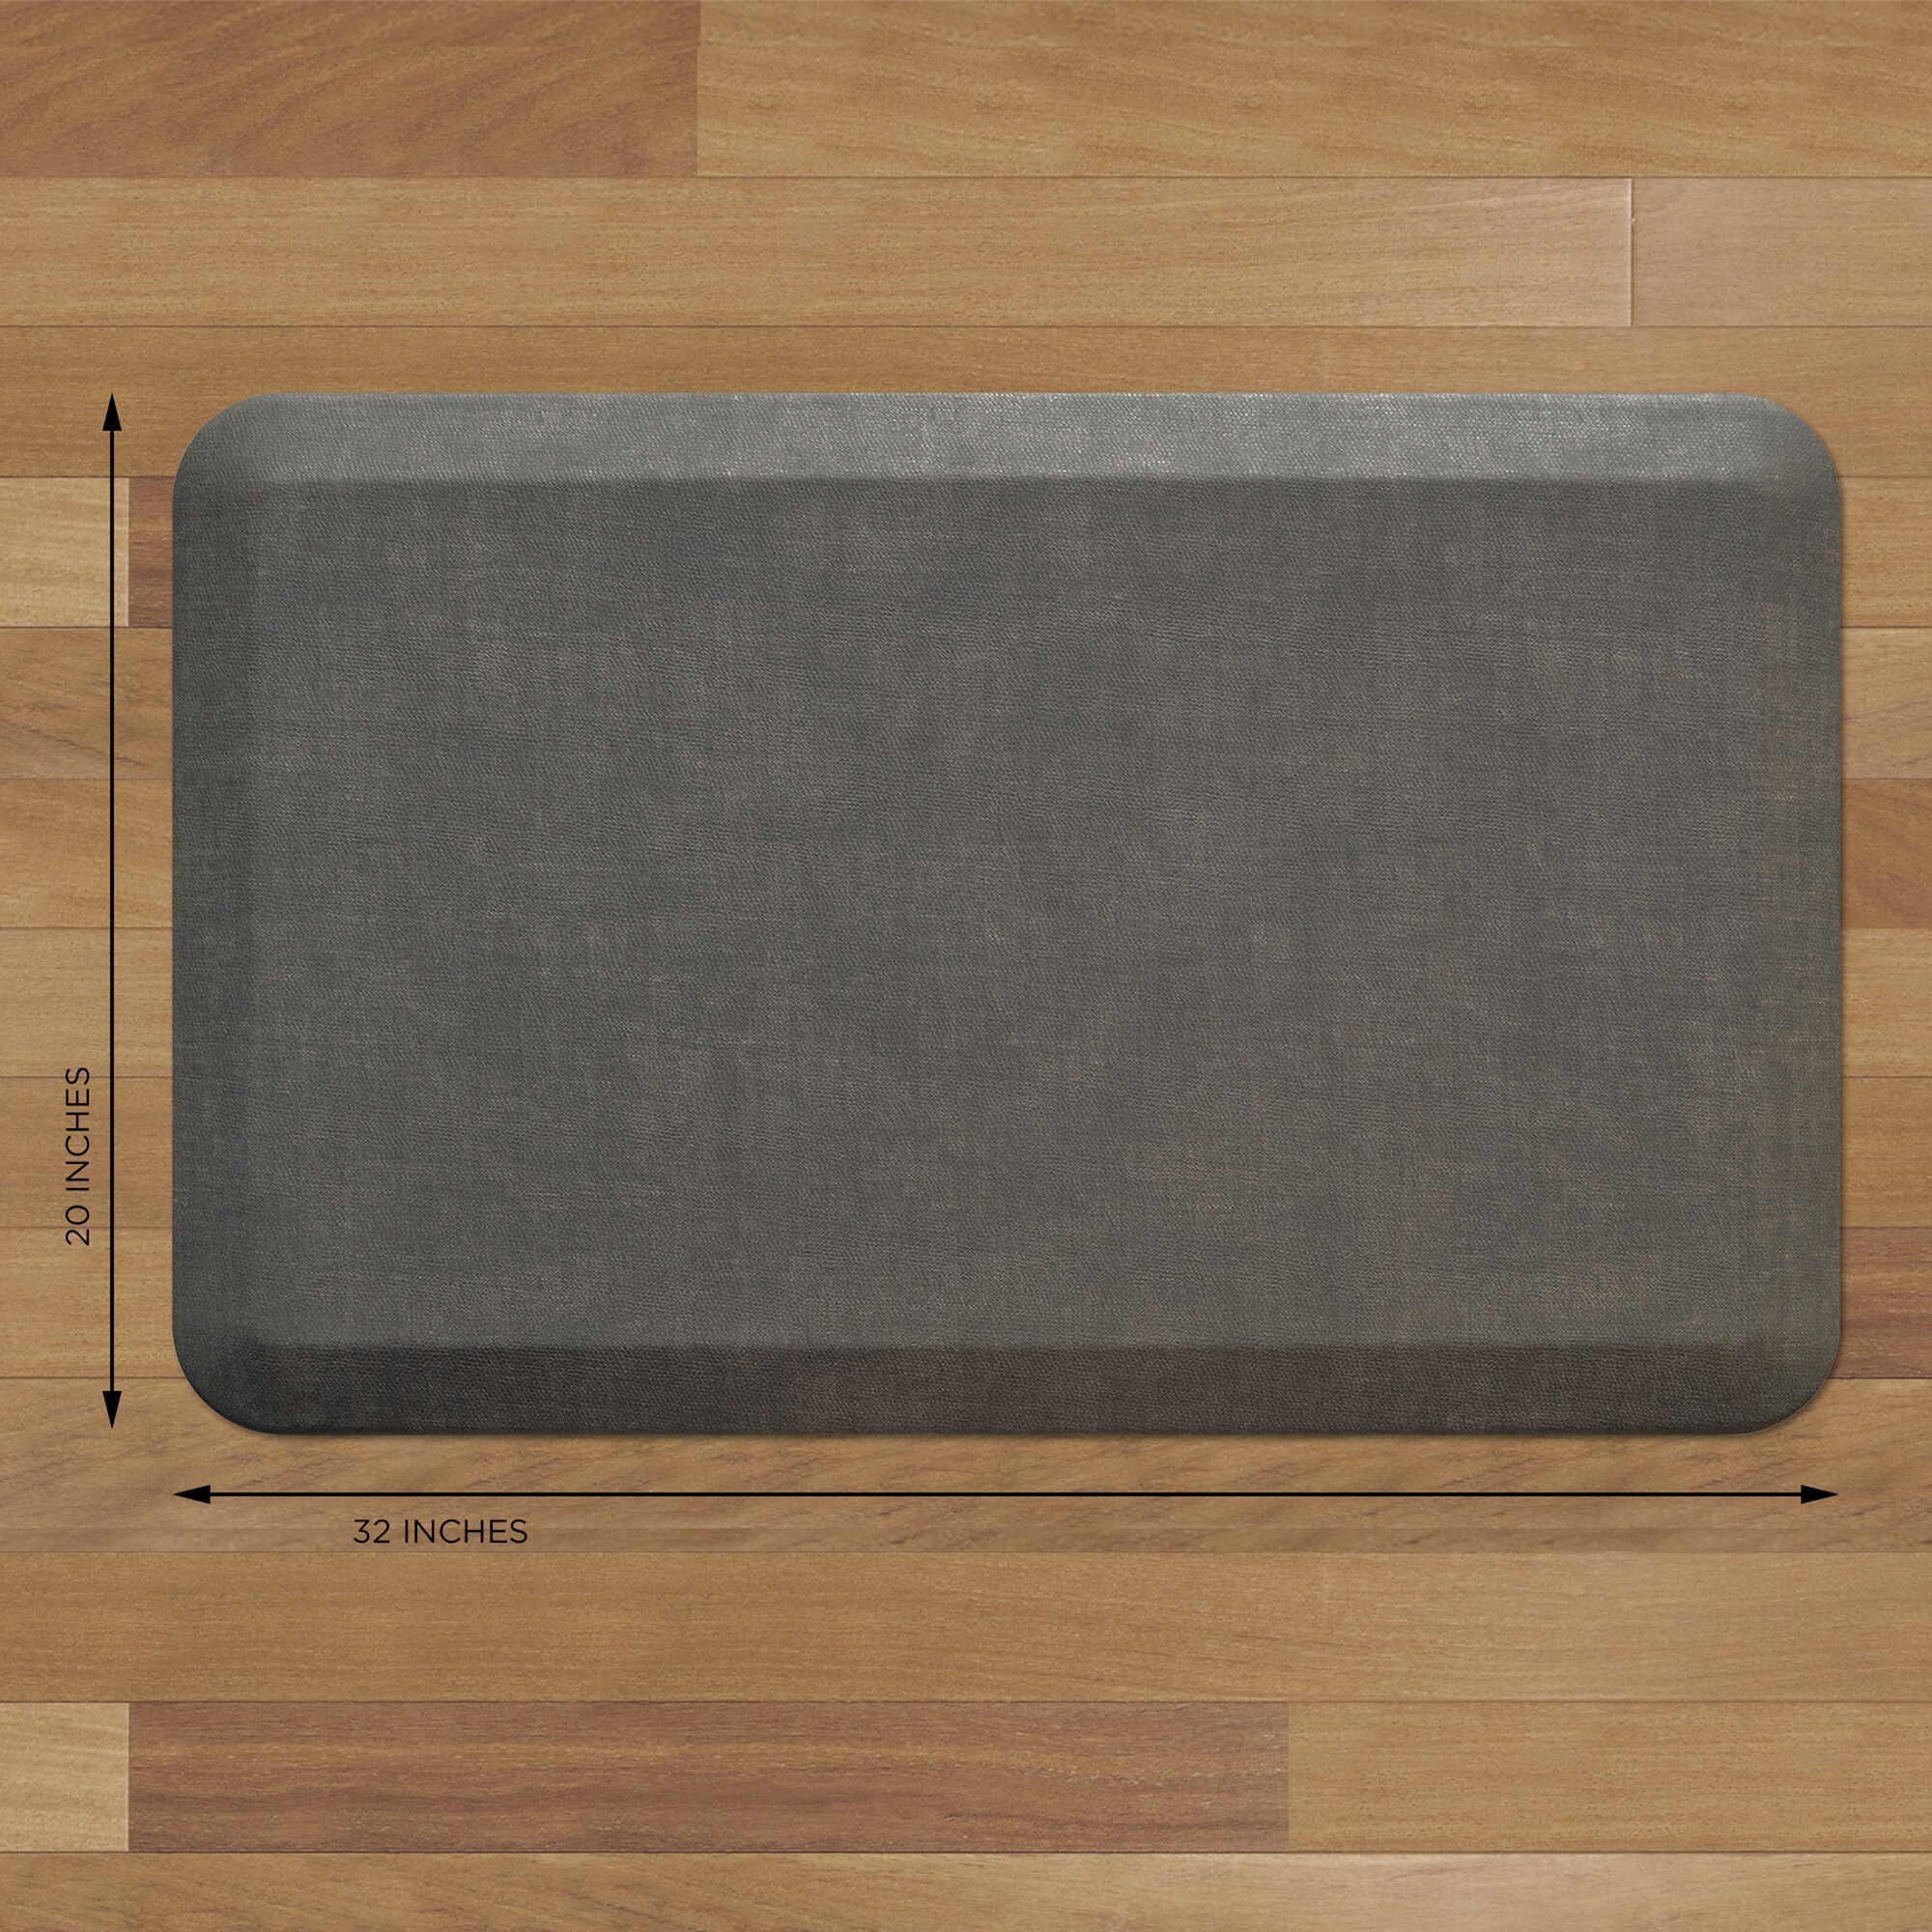 NewLife by GelPro Anti-Fatigue Designer Comfort Kitchen Floor Mat